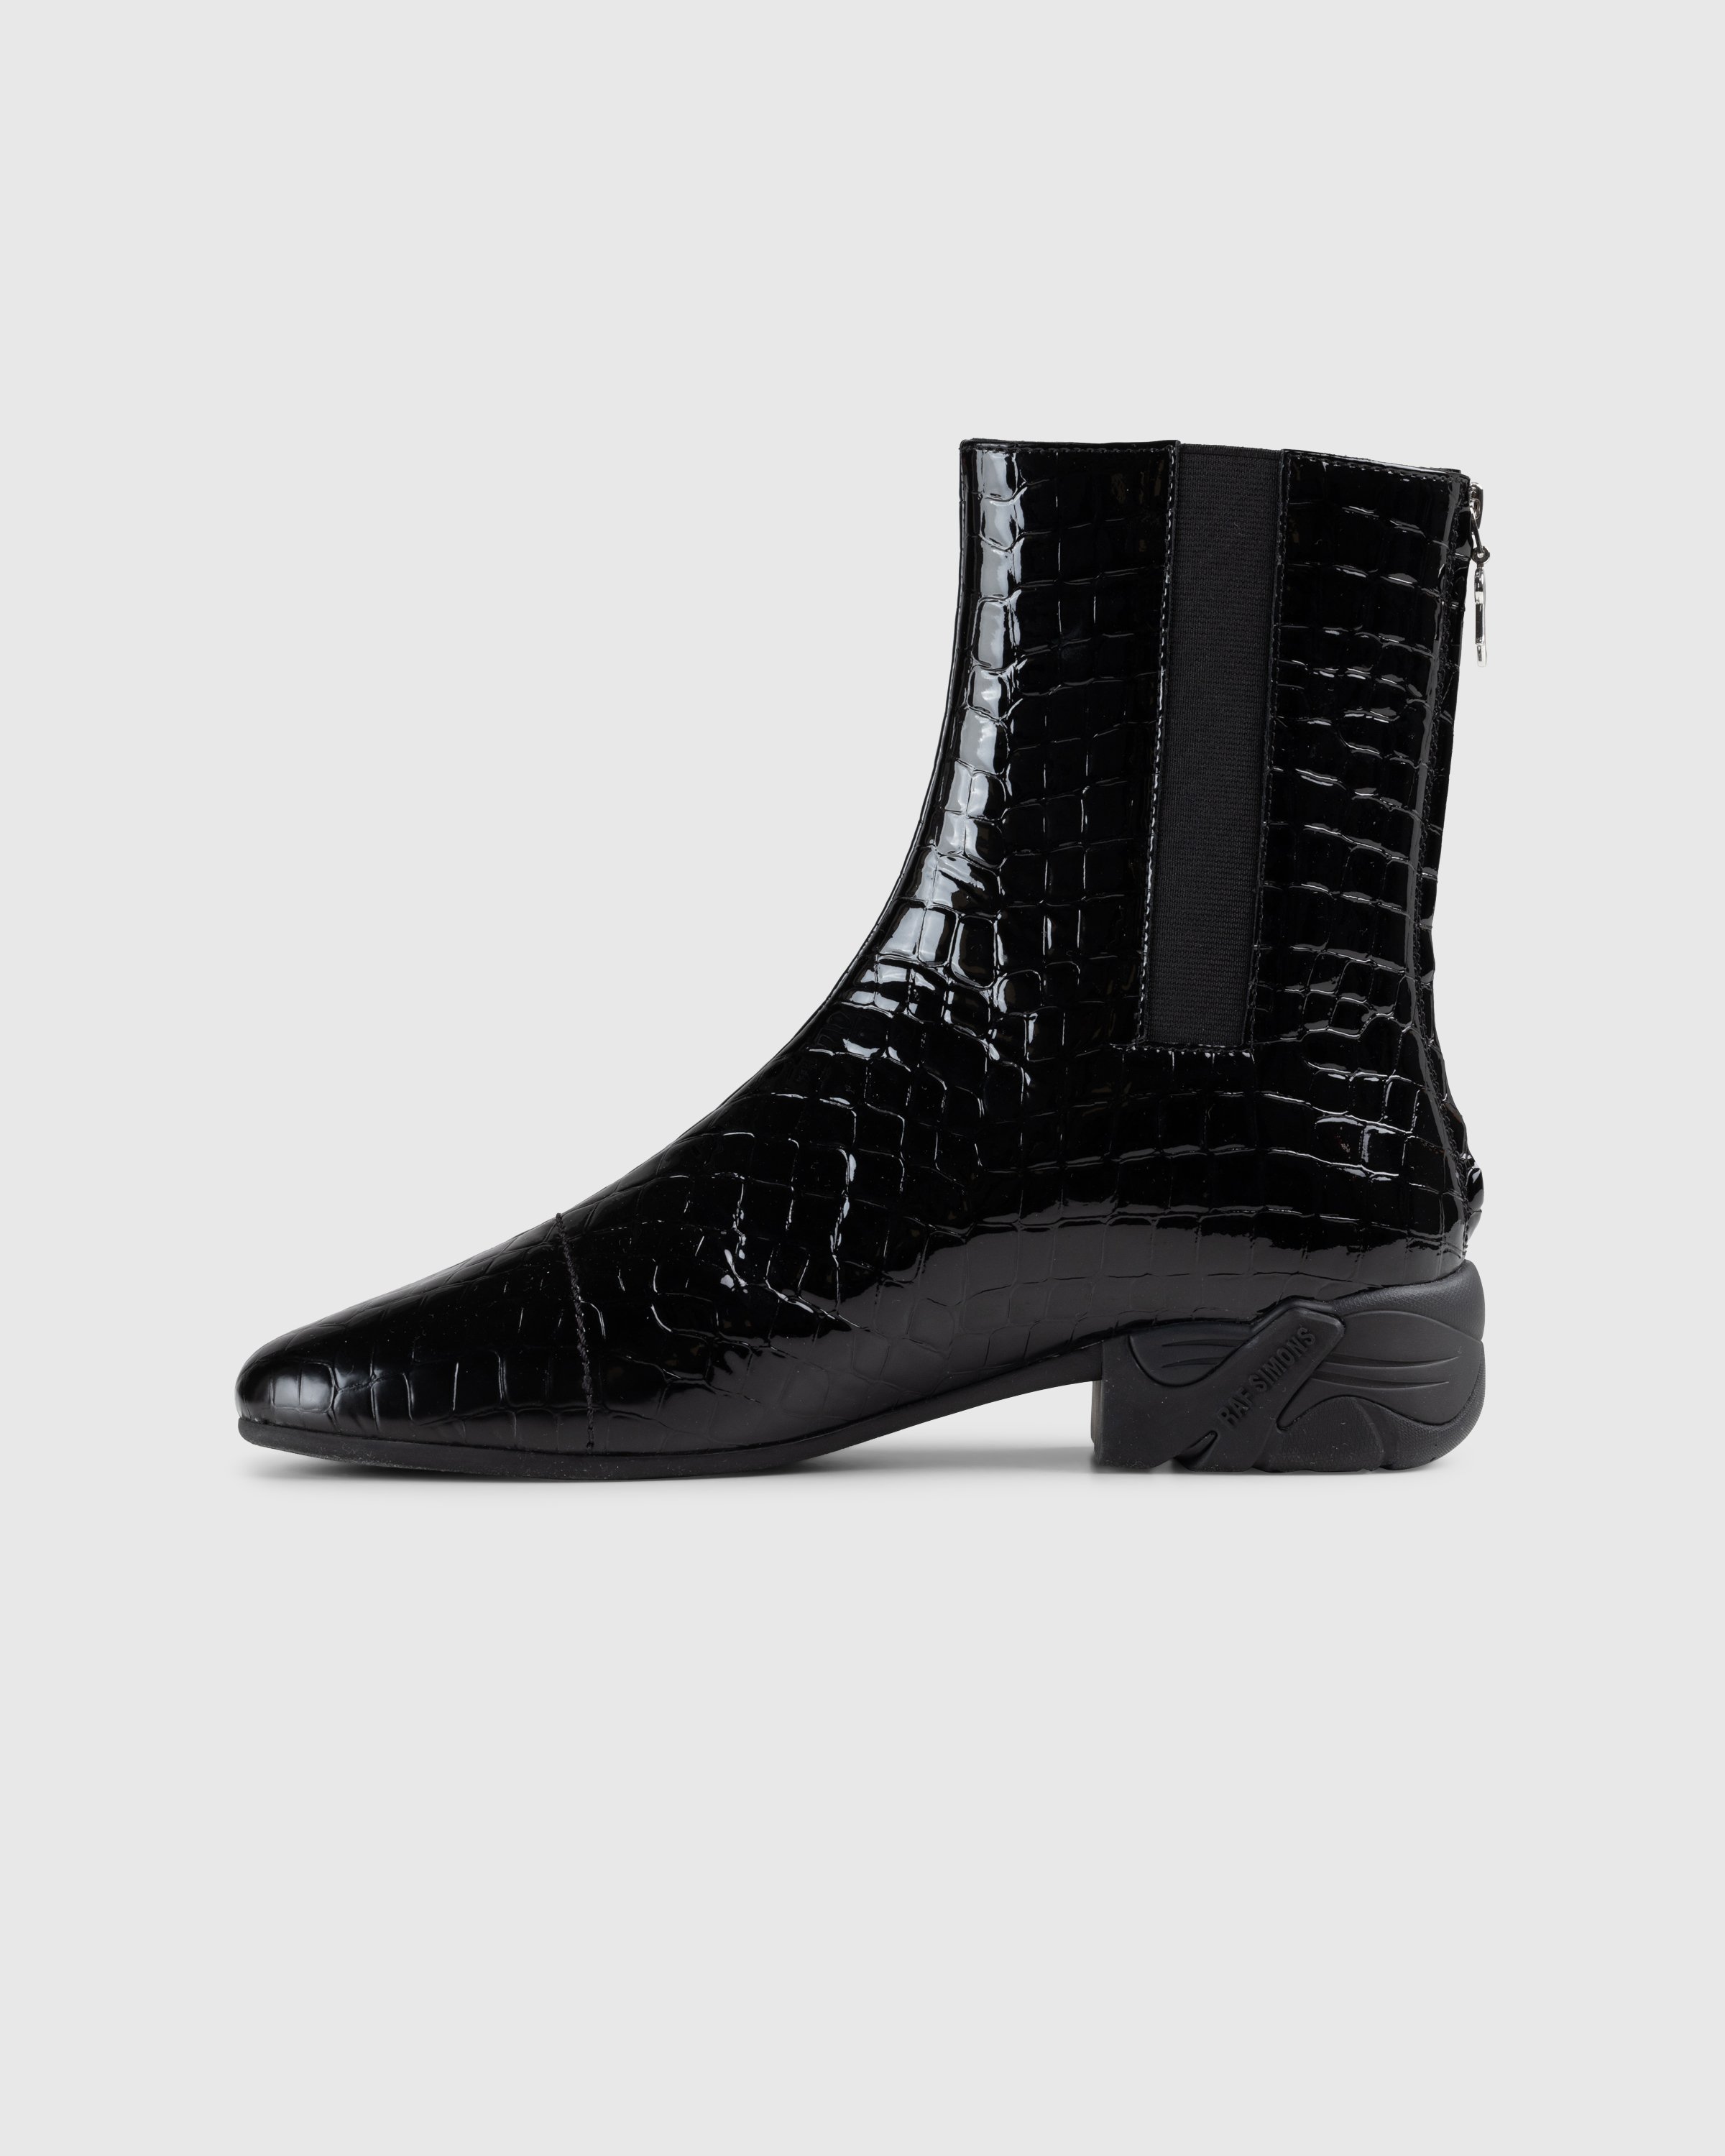 Raf Simons - Solaris High Leather Boot Black Croc - Footwear - Black - Image 2